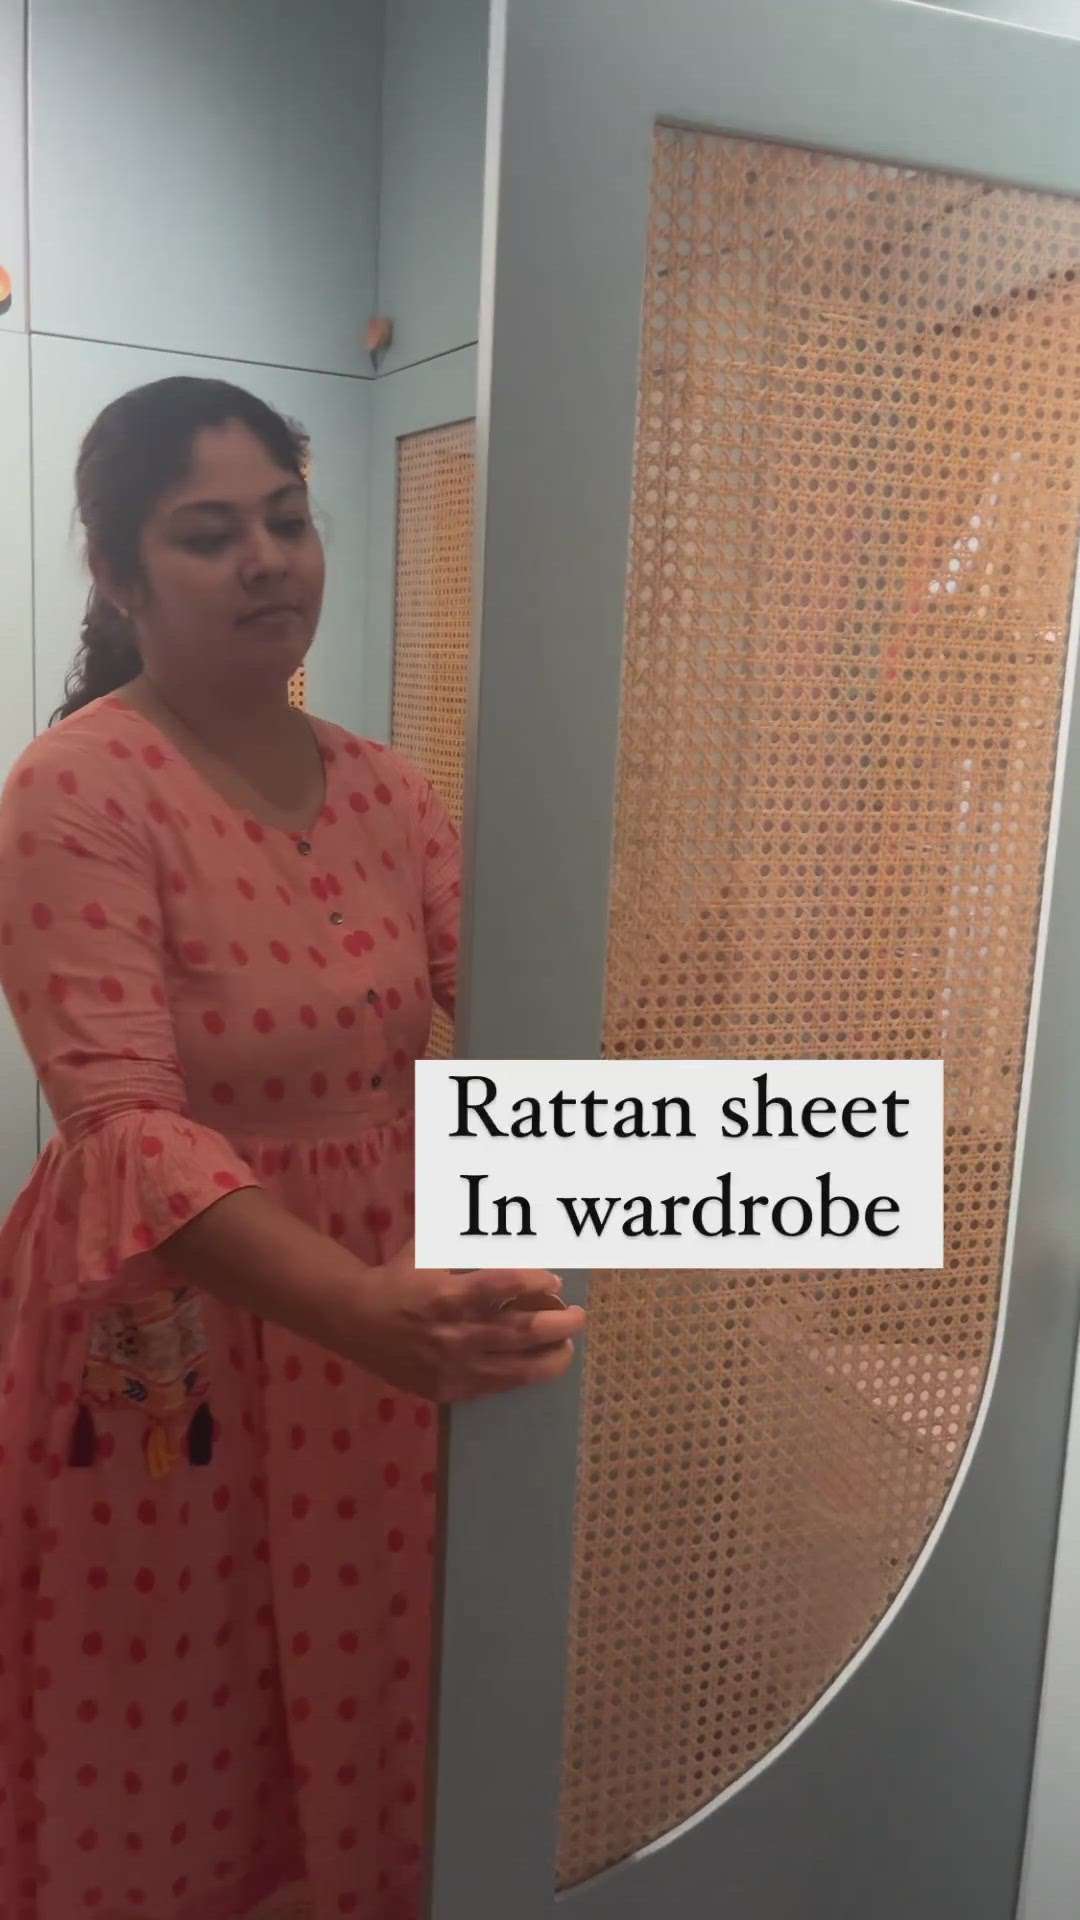 Rattan sheets for wardrobe...
High quality works, affordable price... cntact 9496361476

#WardrobeIdeas
 #WardrobeDesigns
 #KitchenInterior
 #MasterBedroom
 #rattanseries